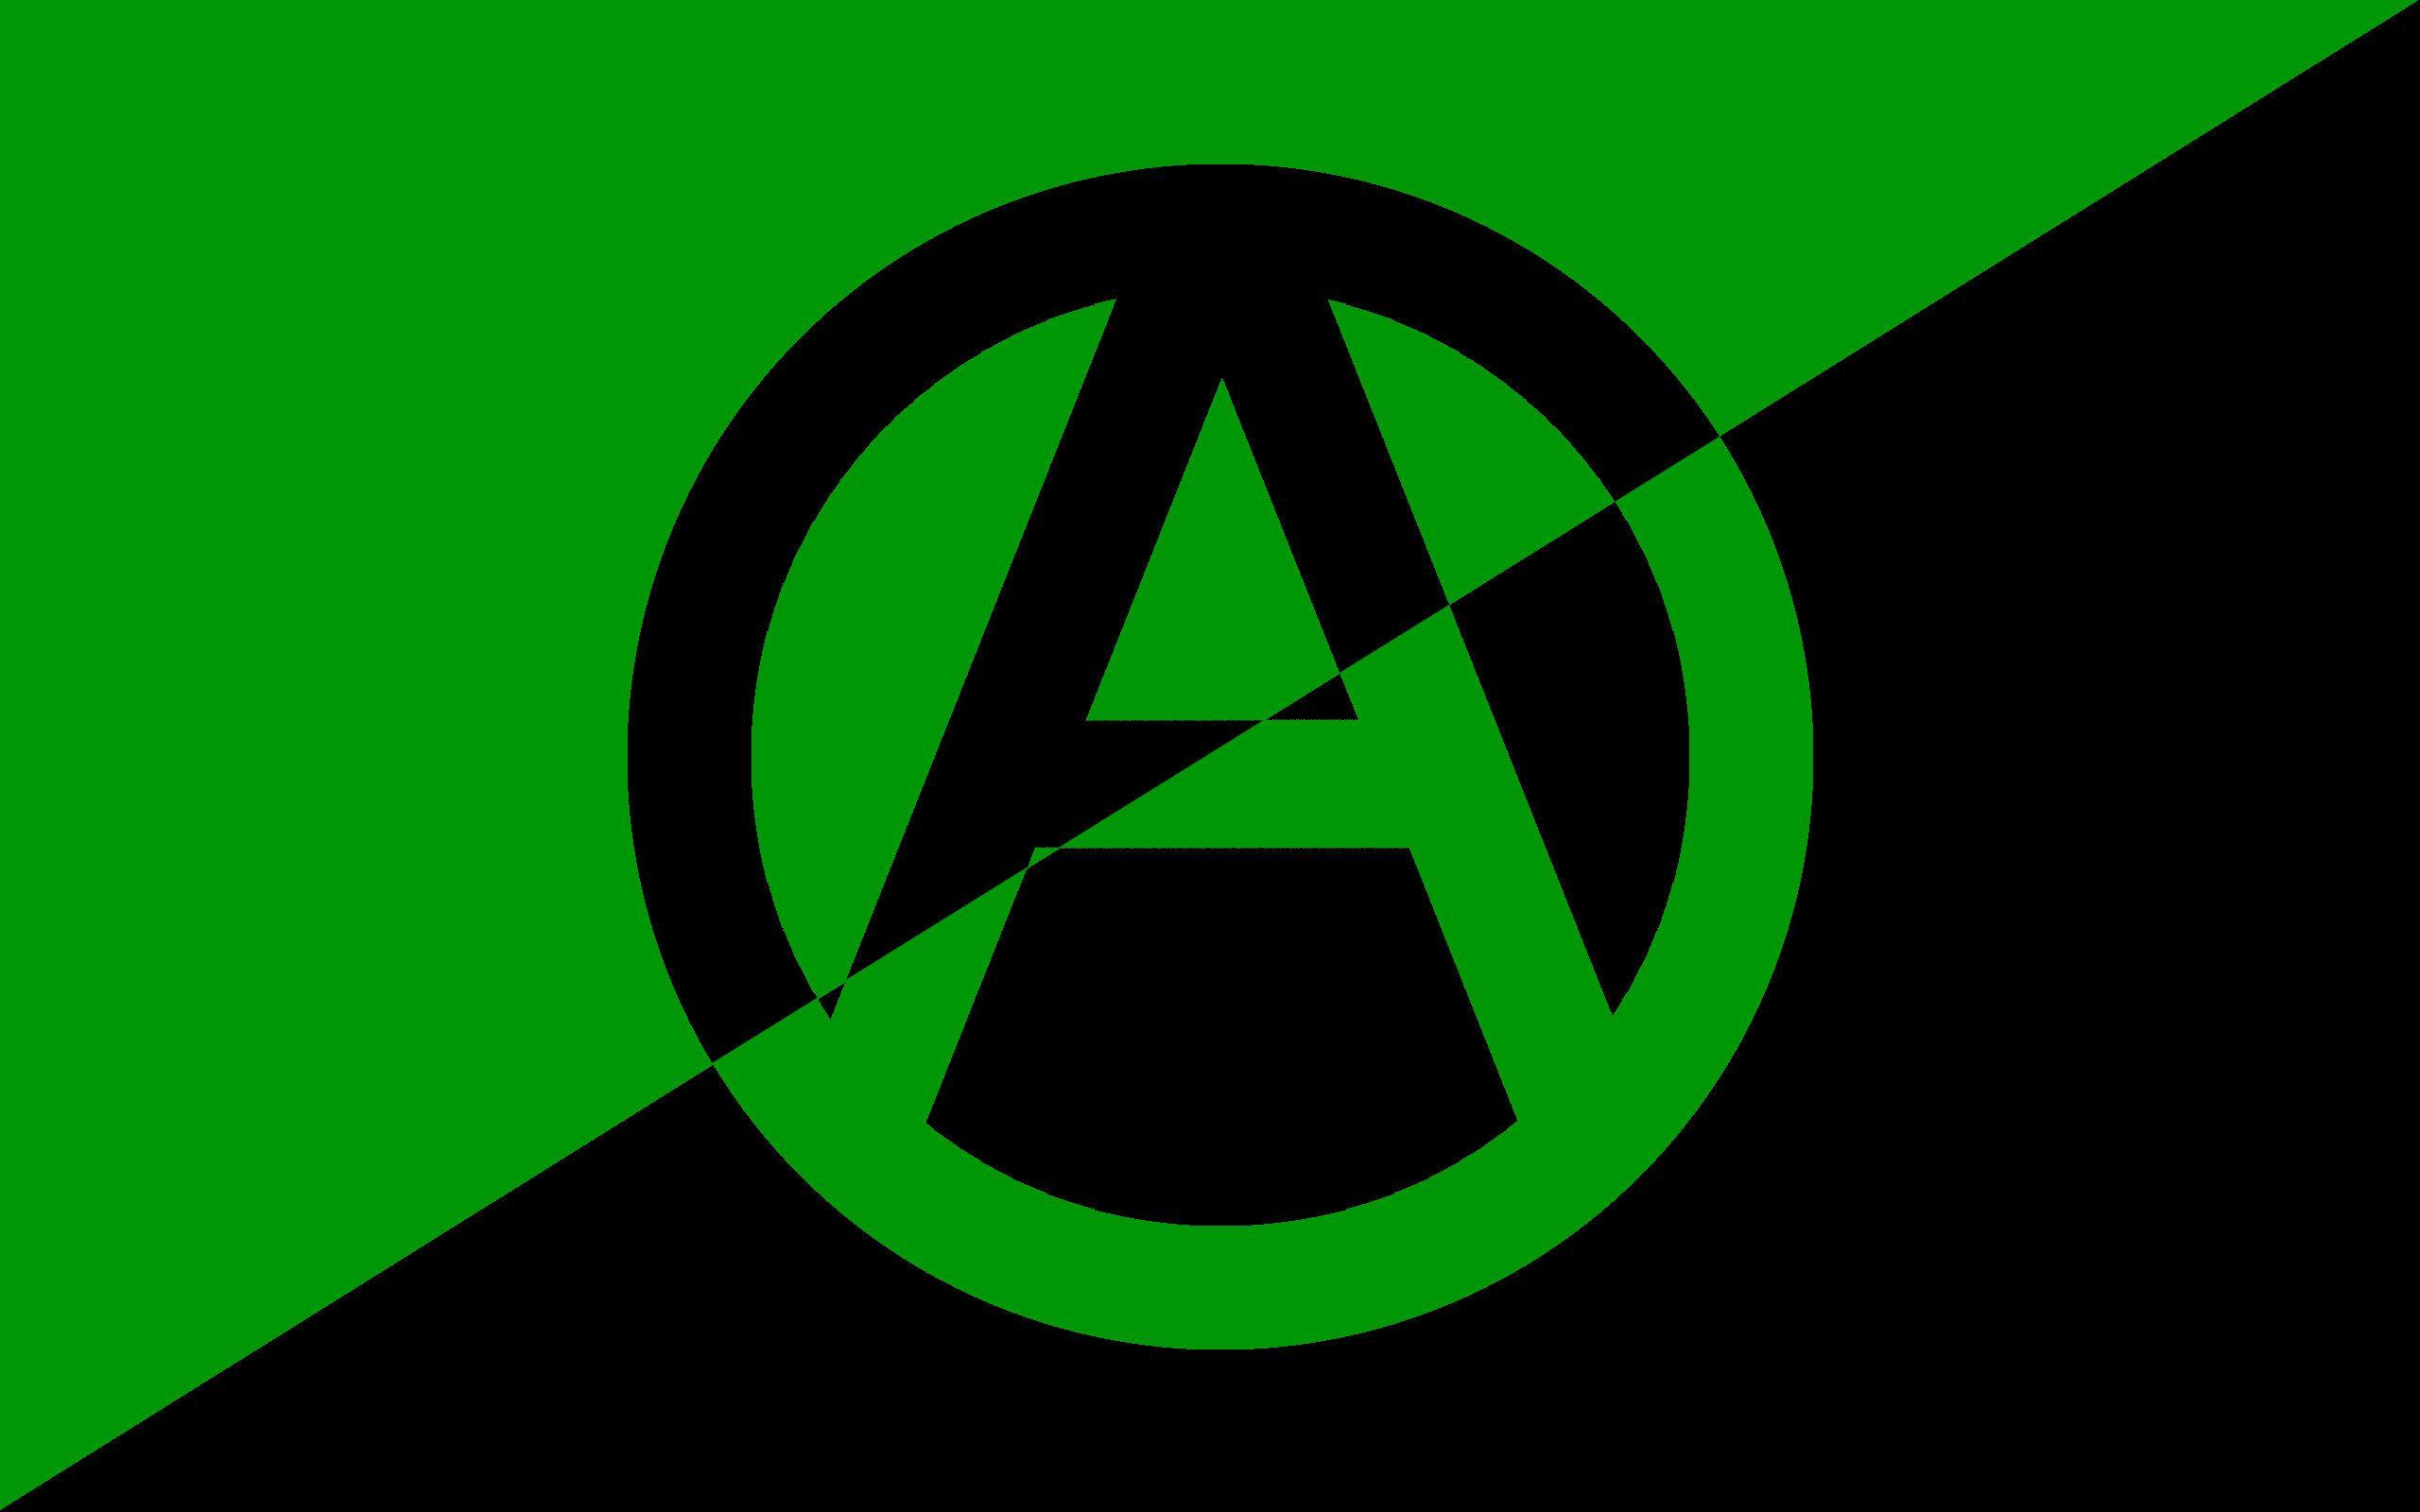 Green Anarchist Emblem